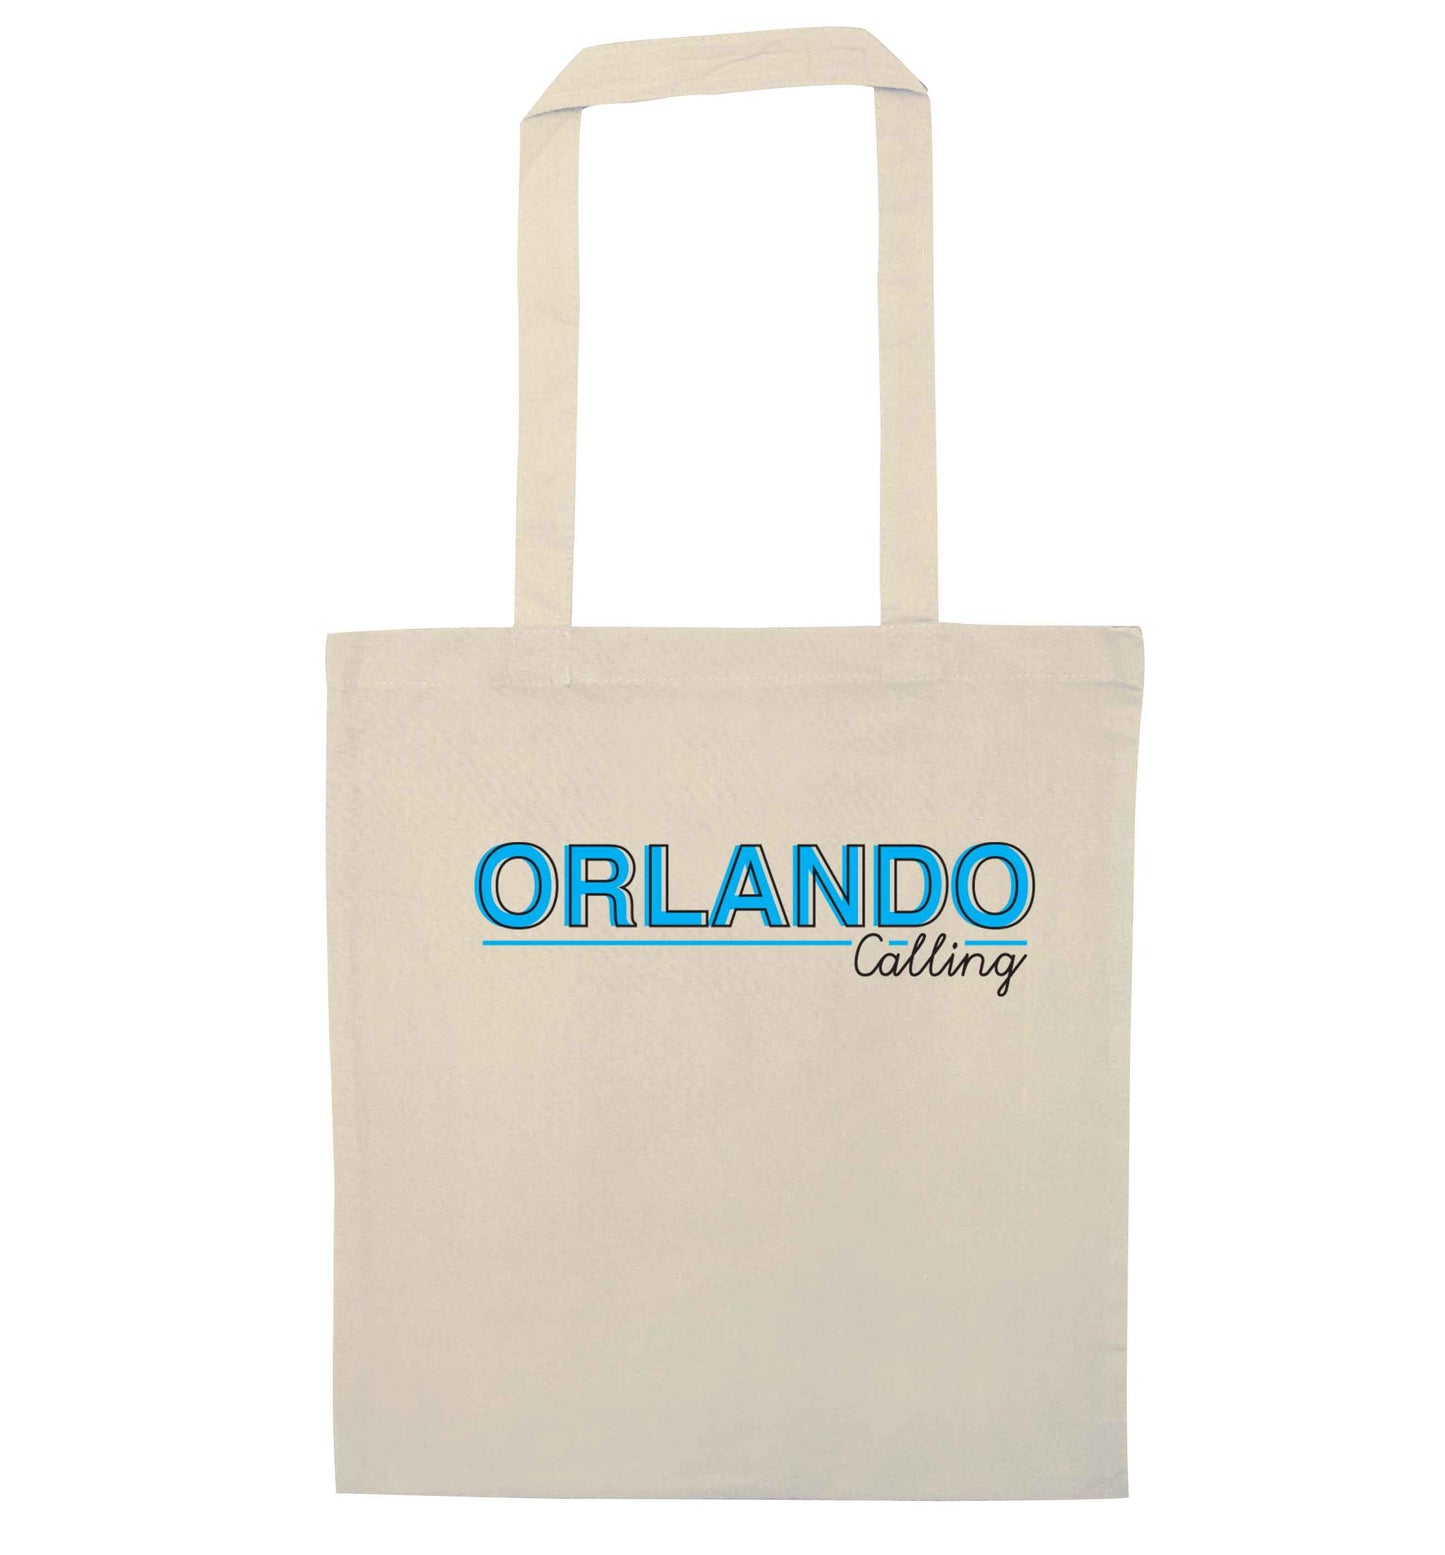 Orlando calling natural tote bag